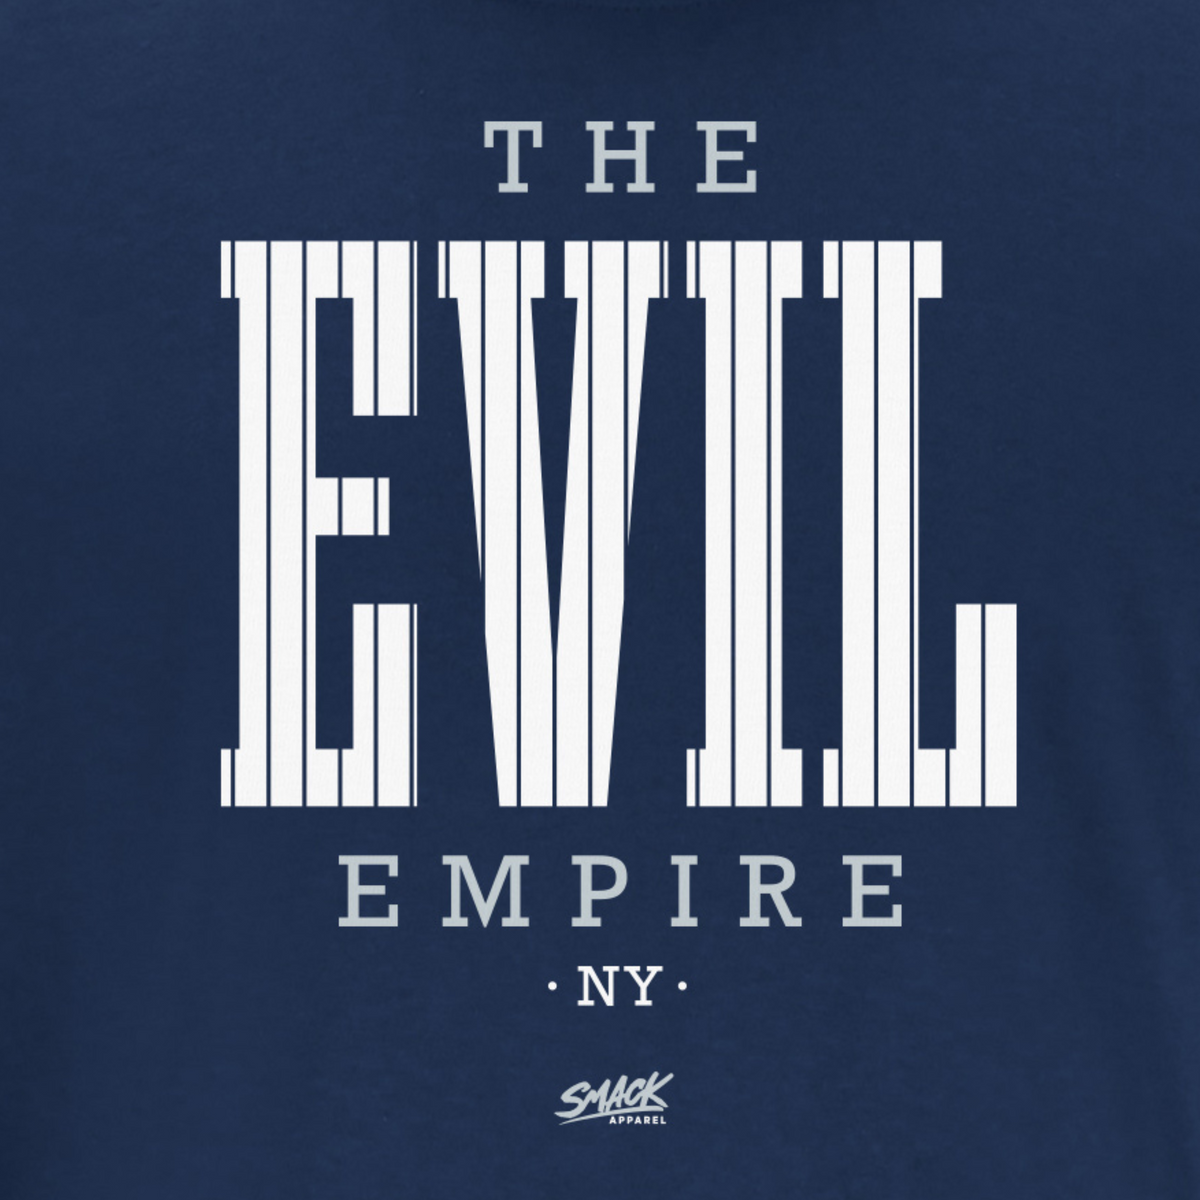 Smack Apparel The Evil Empire T-Shirt for New York Baseball Fans (NYY) 2XL / Short Sleeve / Navy